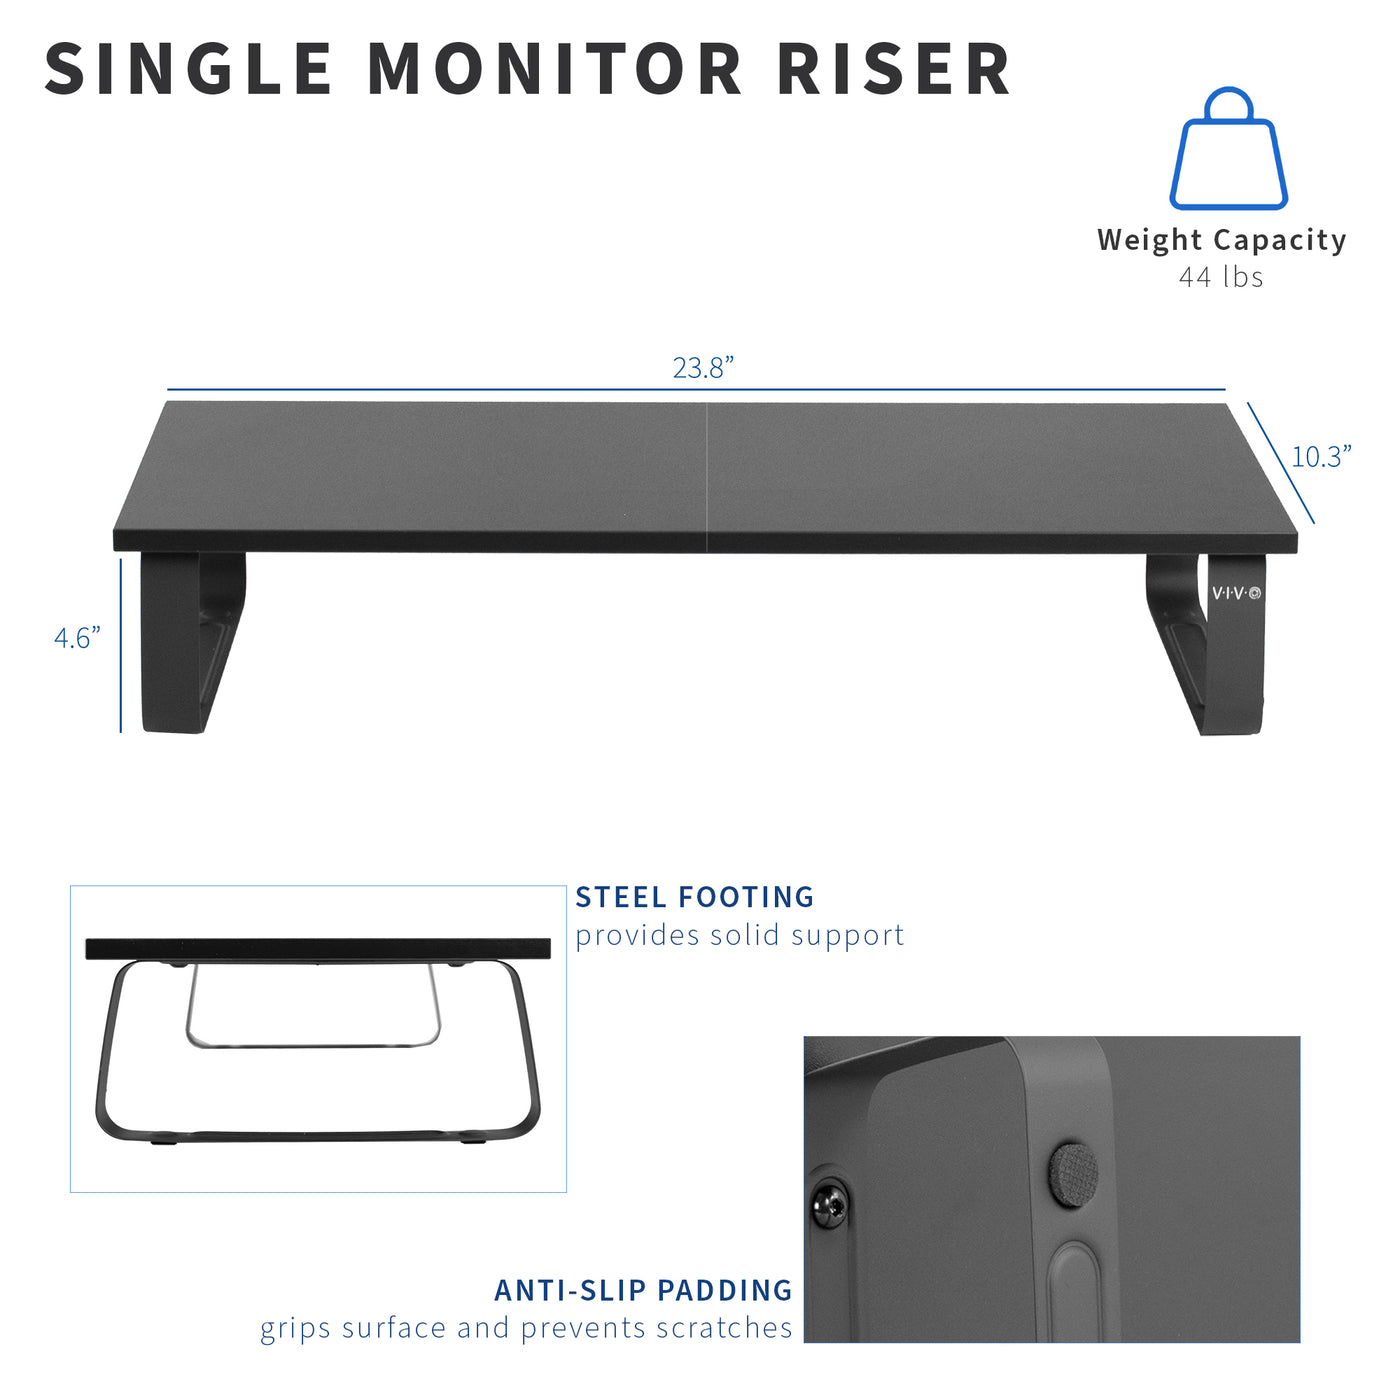 Single monitor or laptop riser from VIVO.